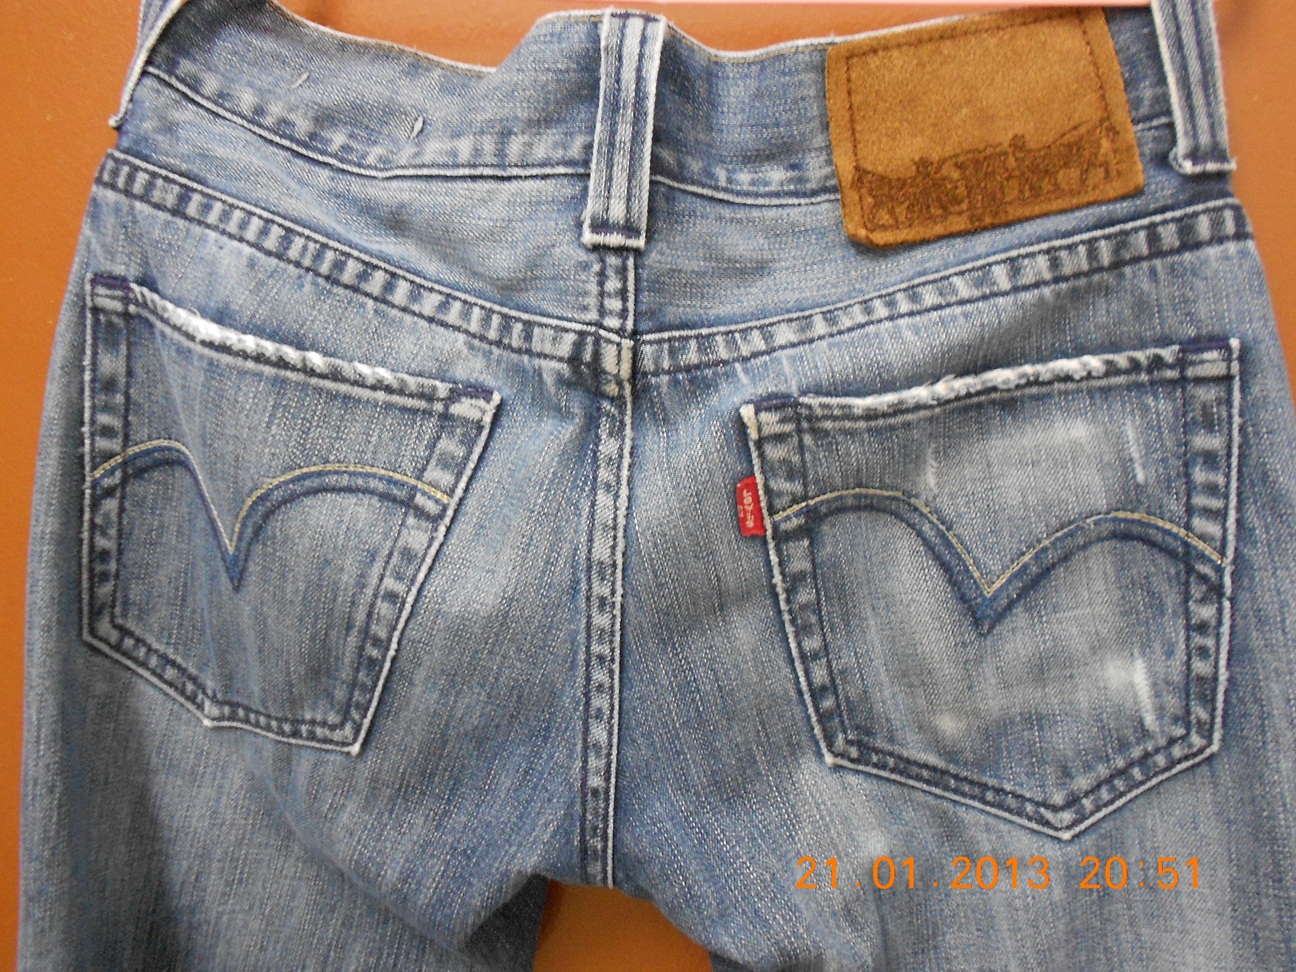 Cari Jeans: Levis 522 Premium Jeans